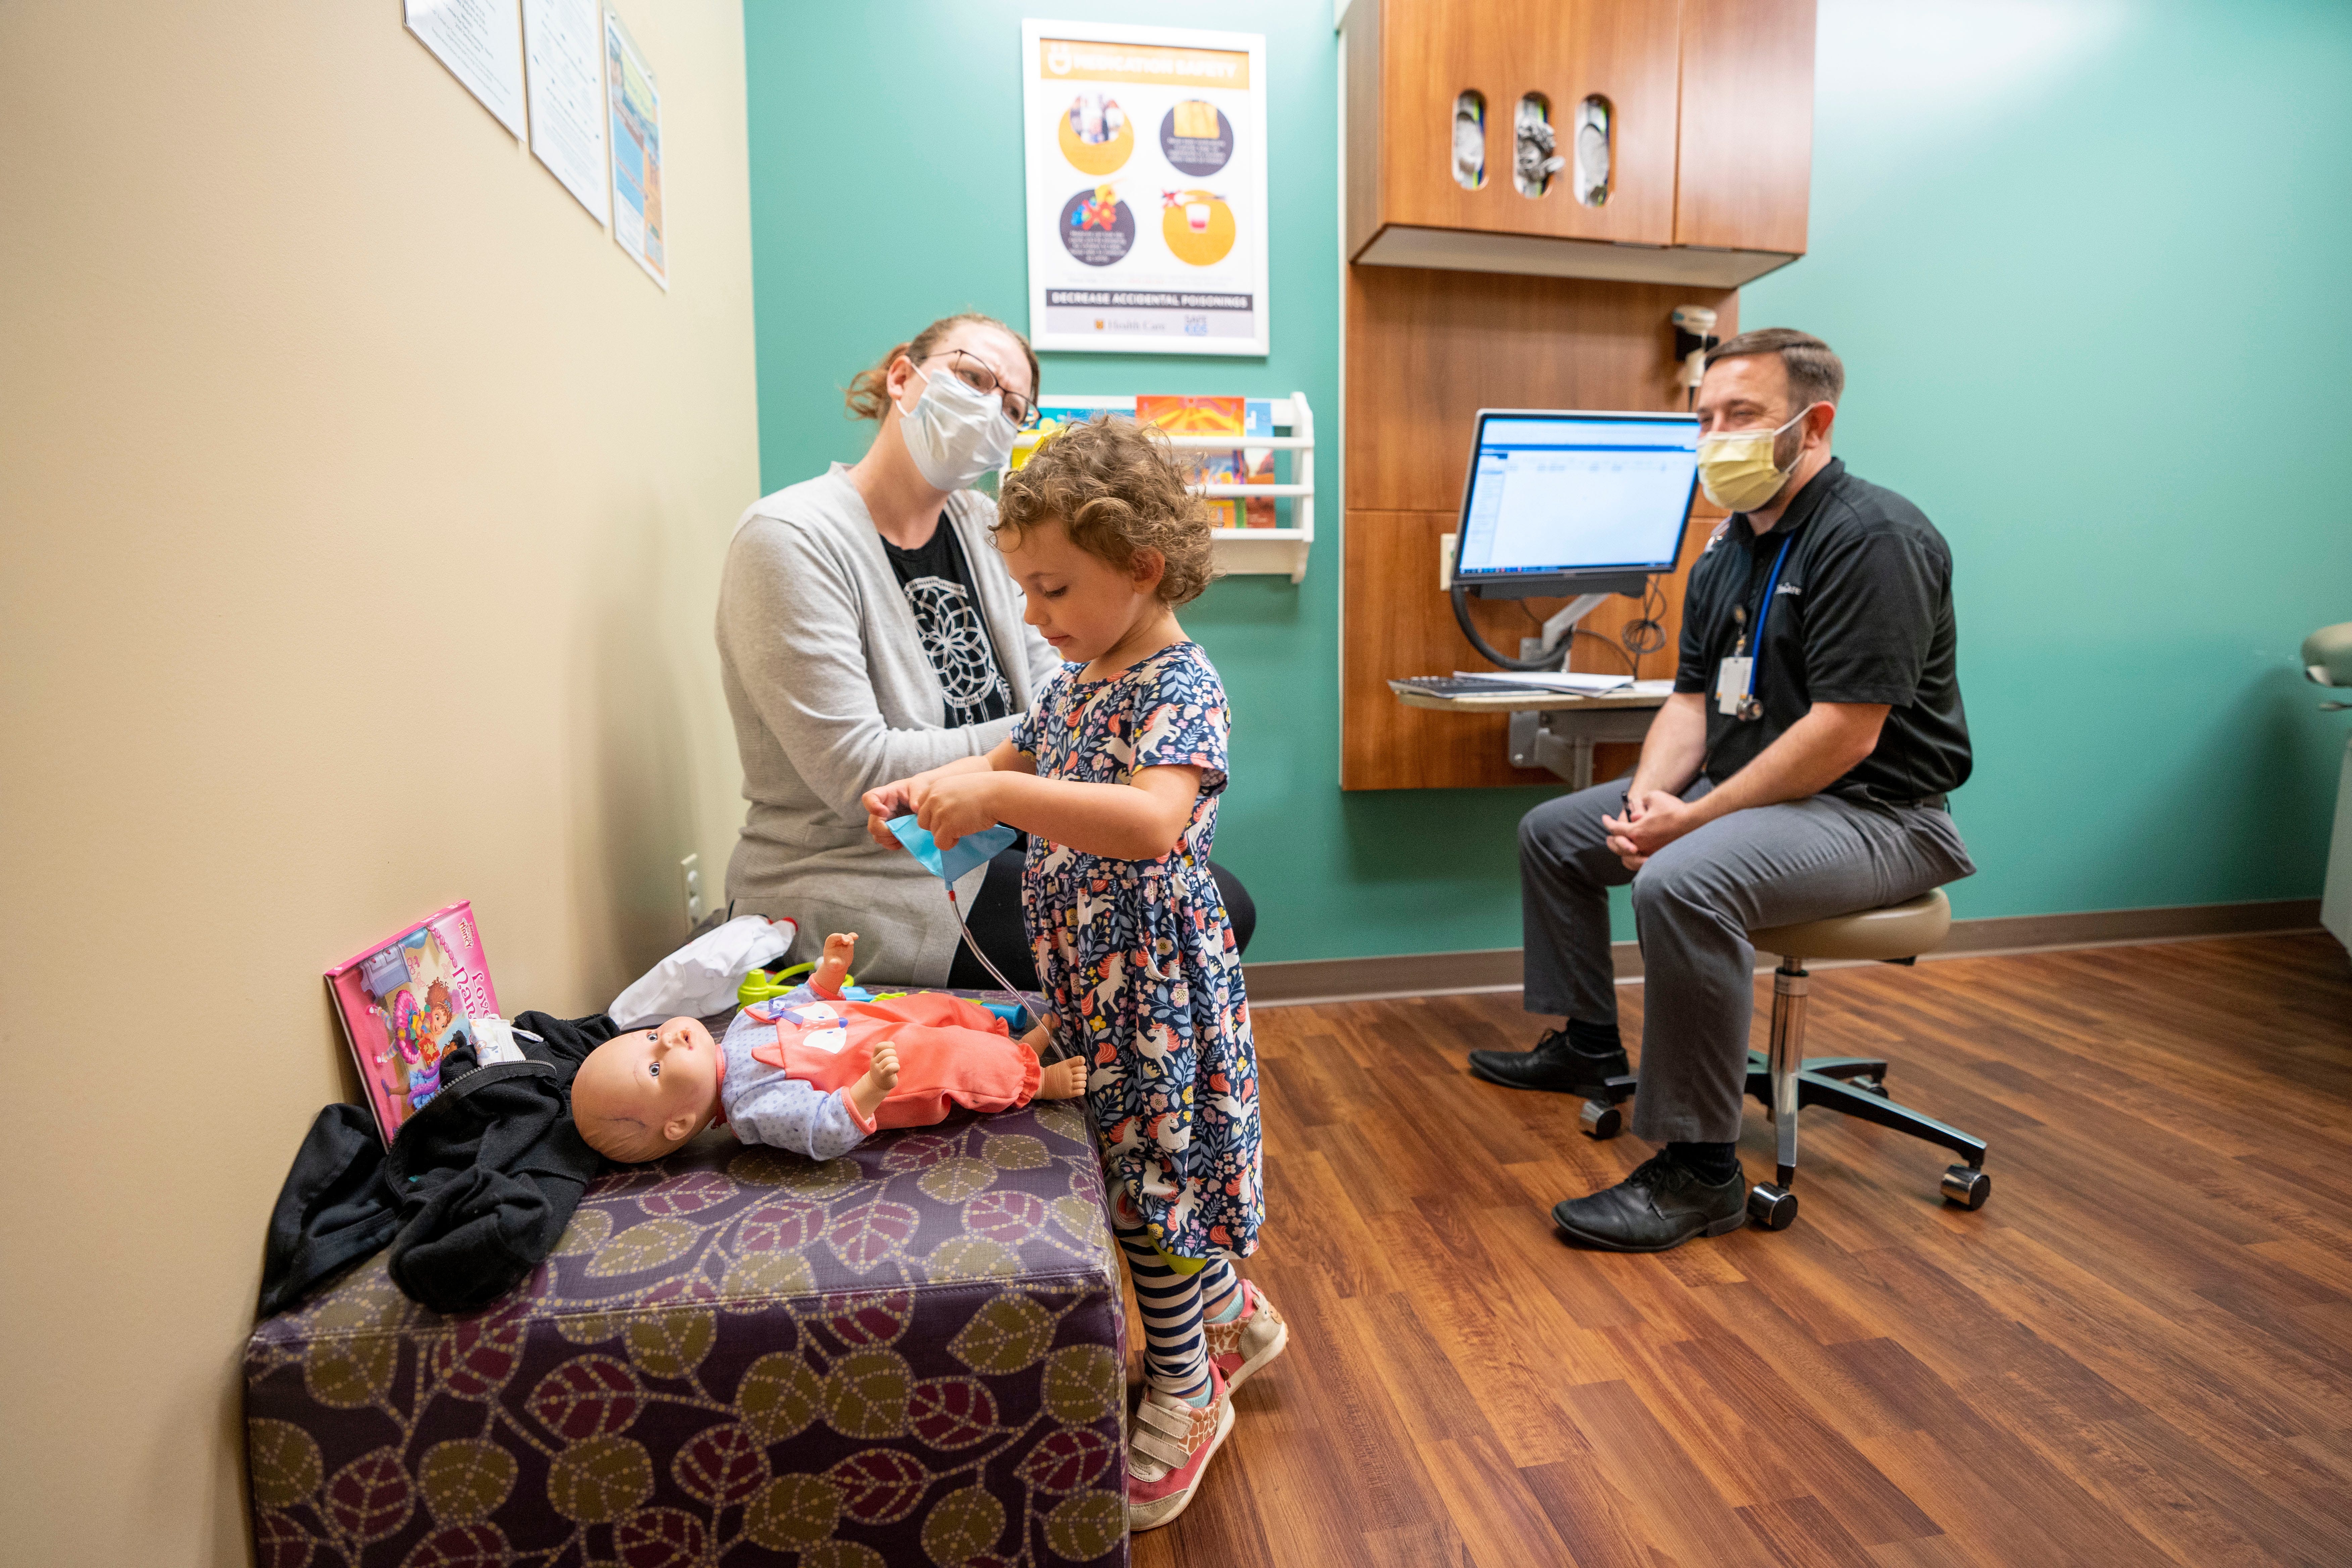 Jessica Mahurin, 32, and Nylah Mancuso, 3, speak with Dr. Nathan Beucke during Nylah’s checkup April 28 in Columbia, Mo.